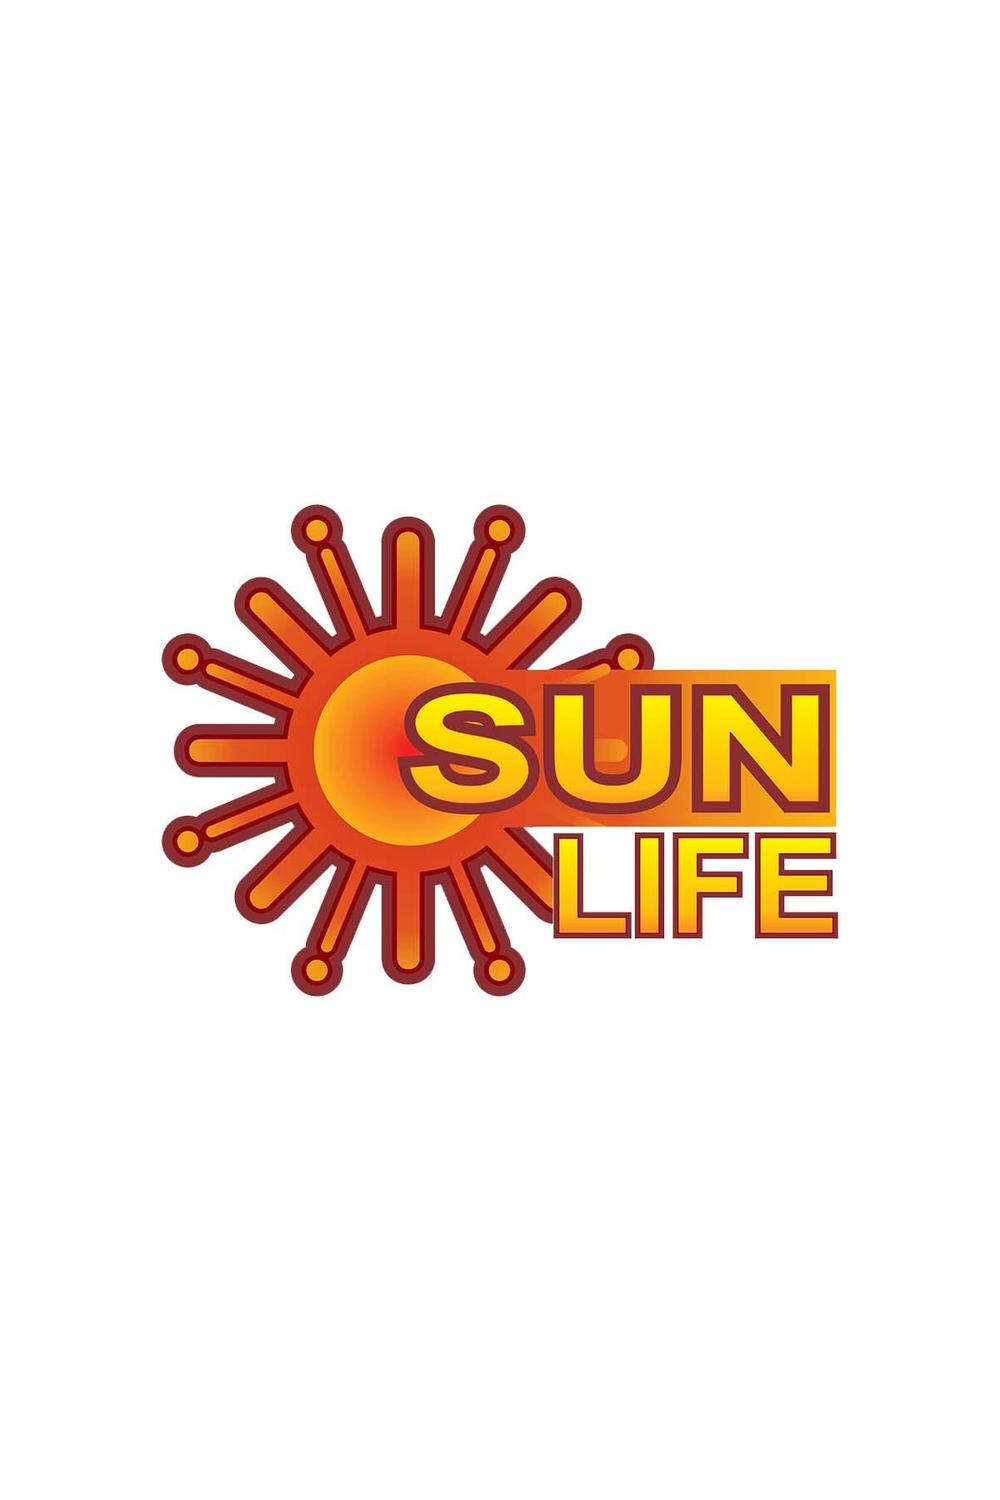 Sun news live